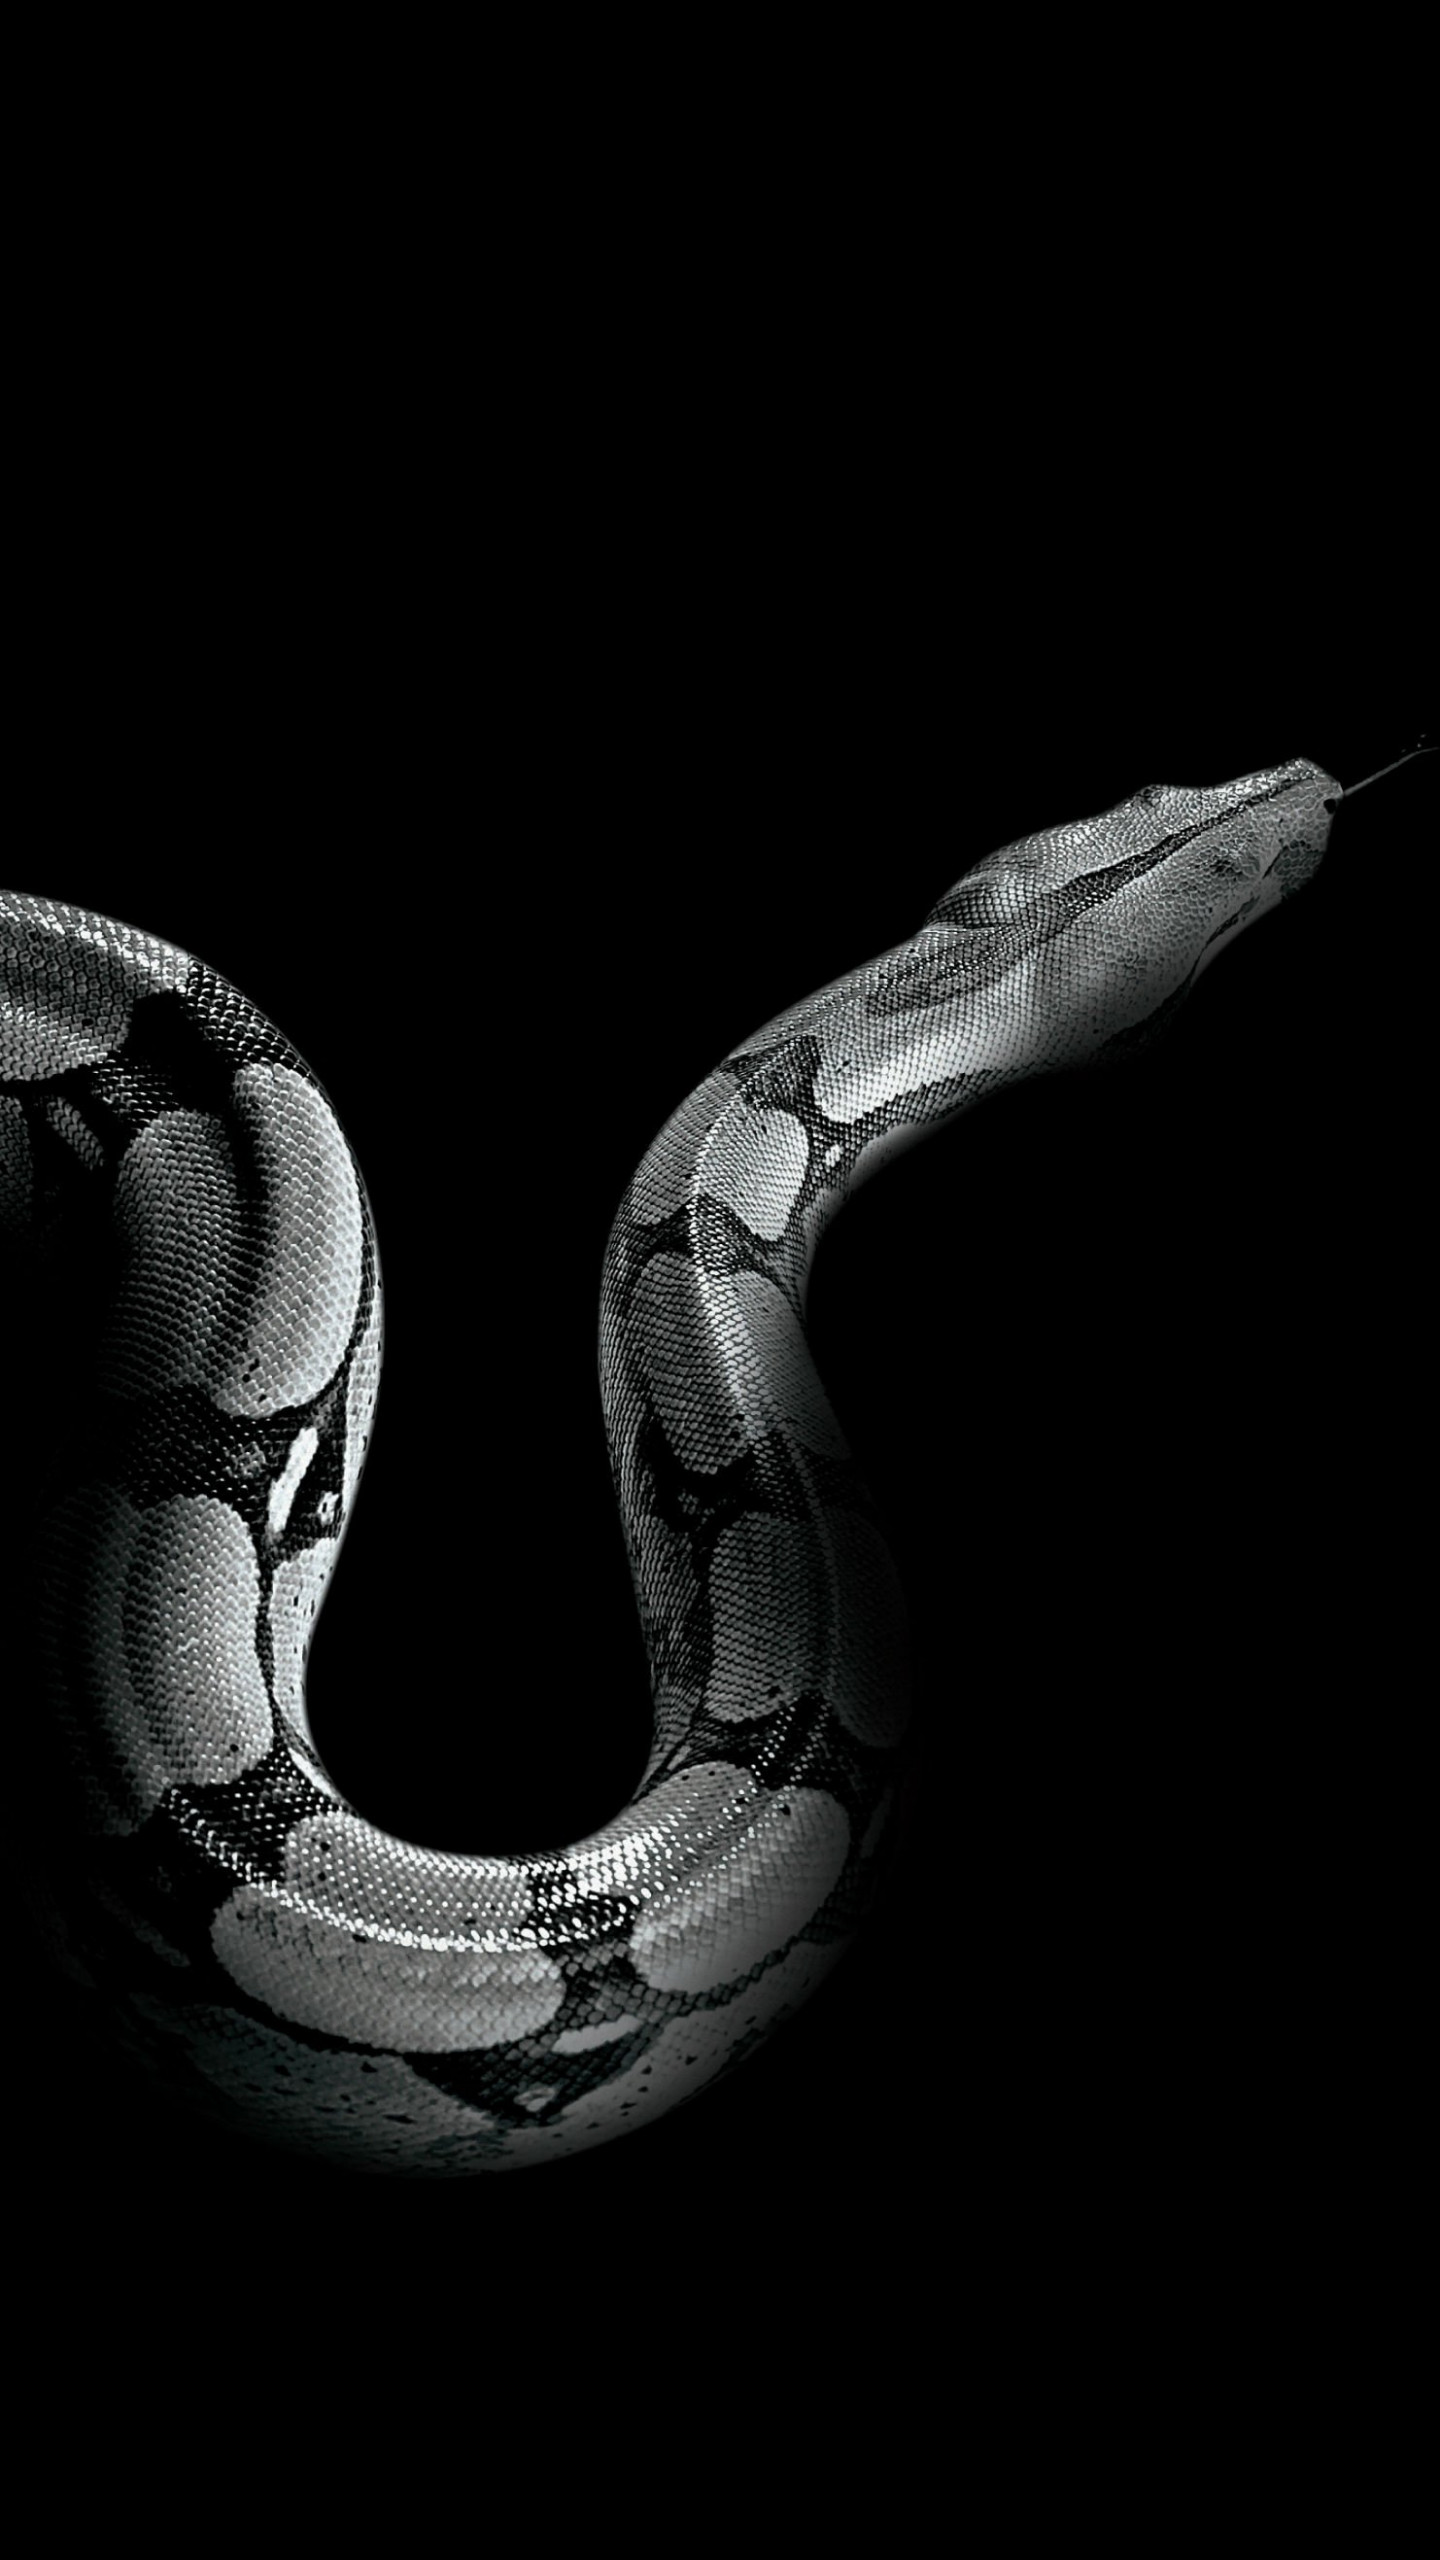 Wallpaper Python Snake Animals 54